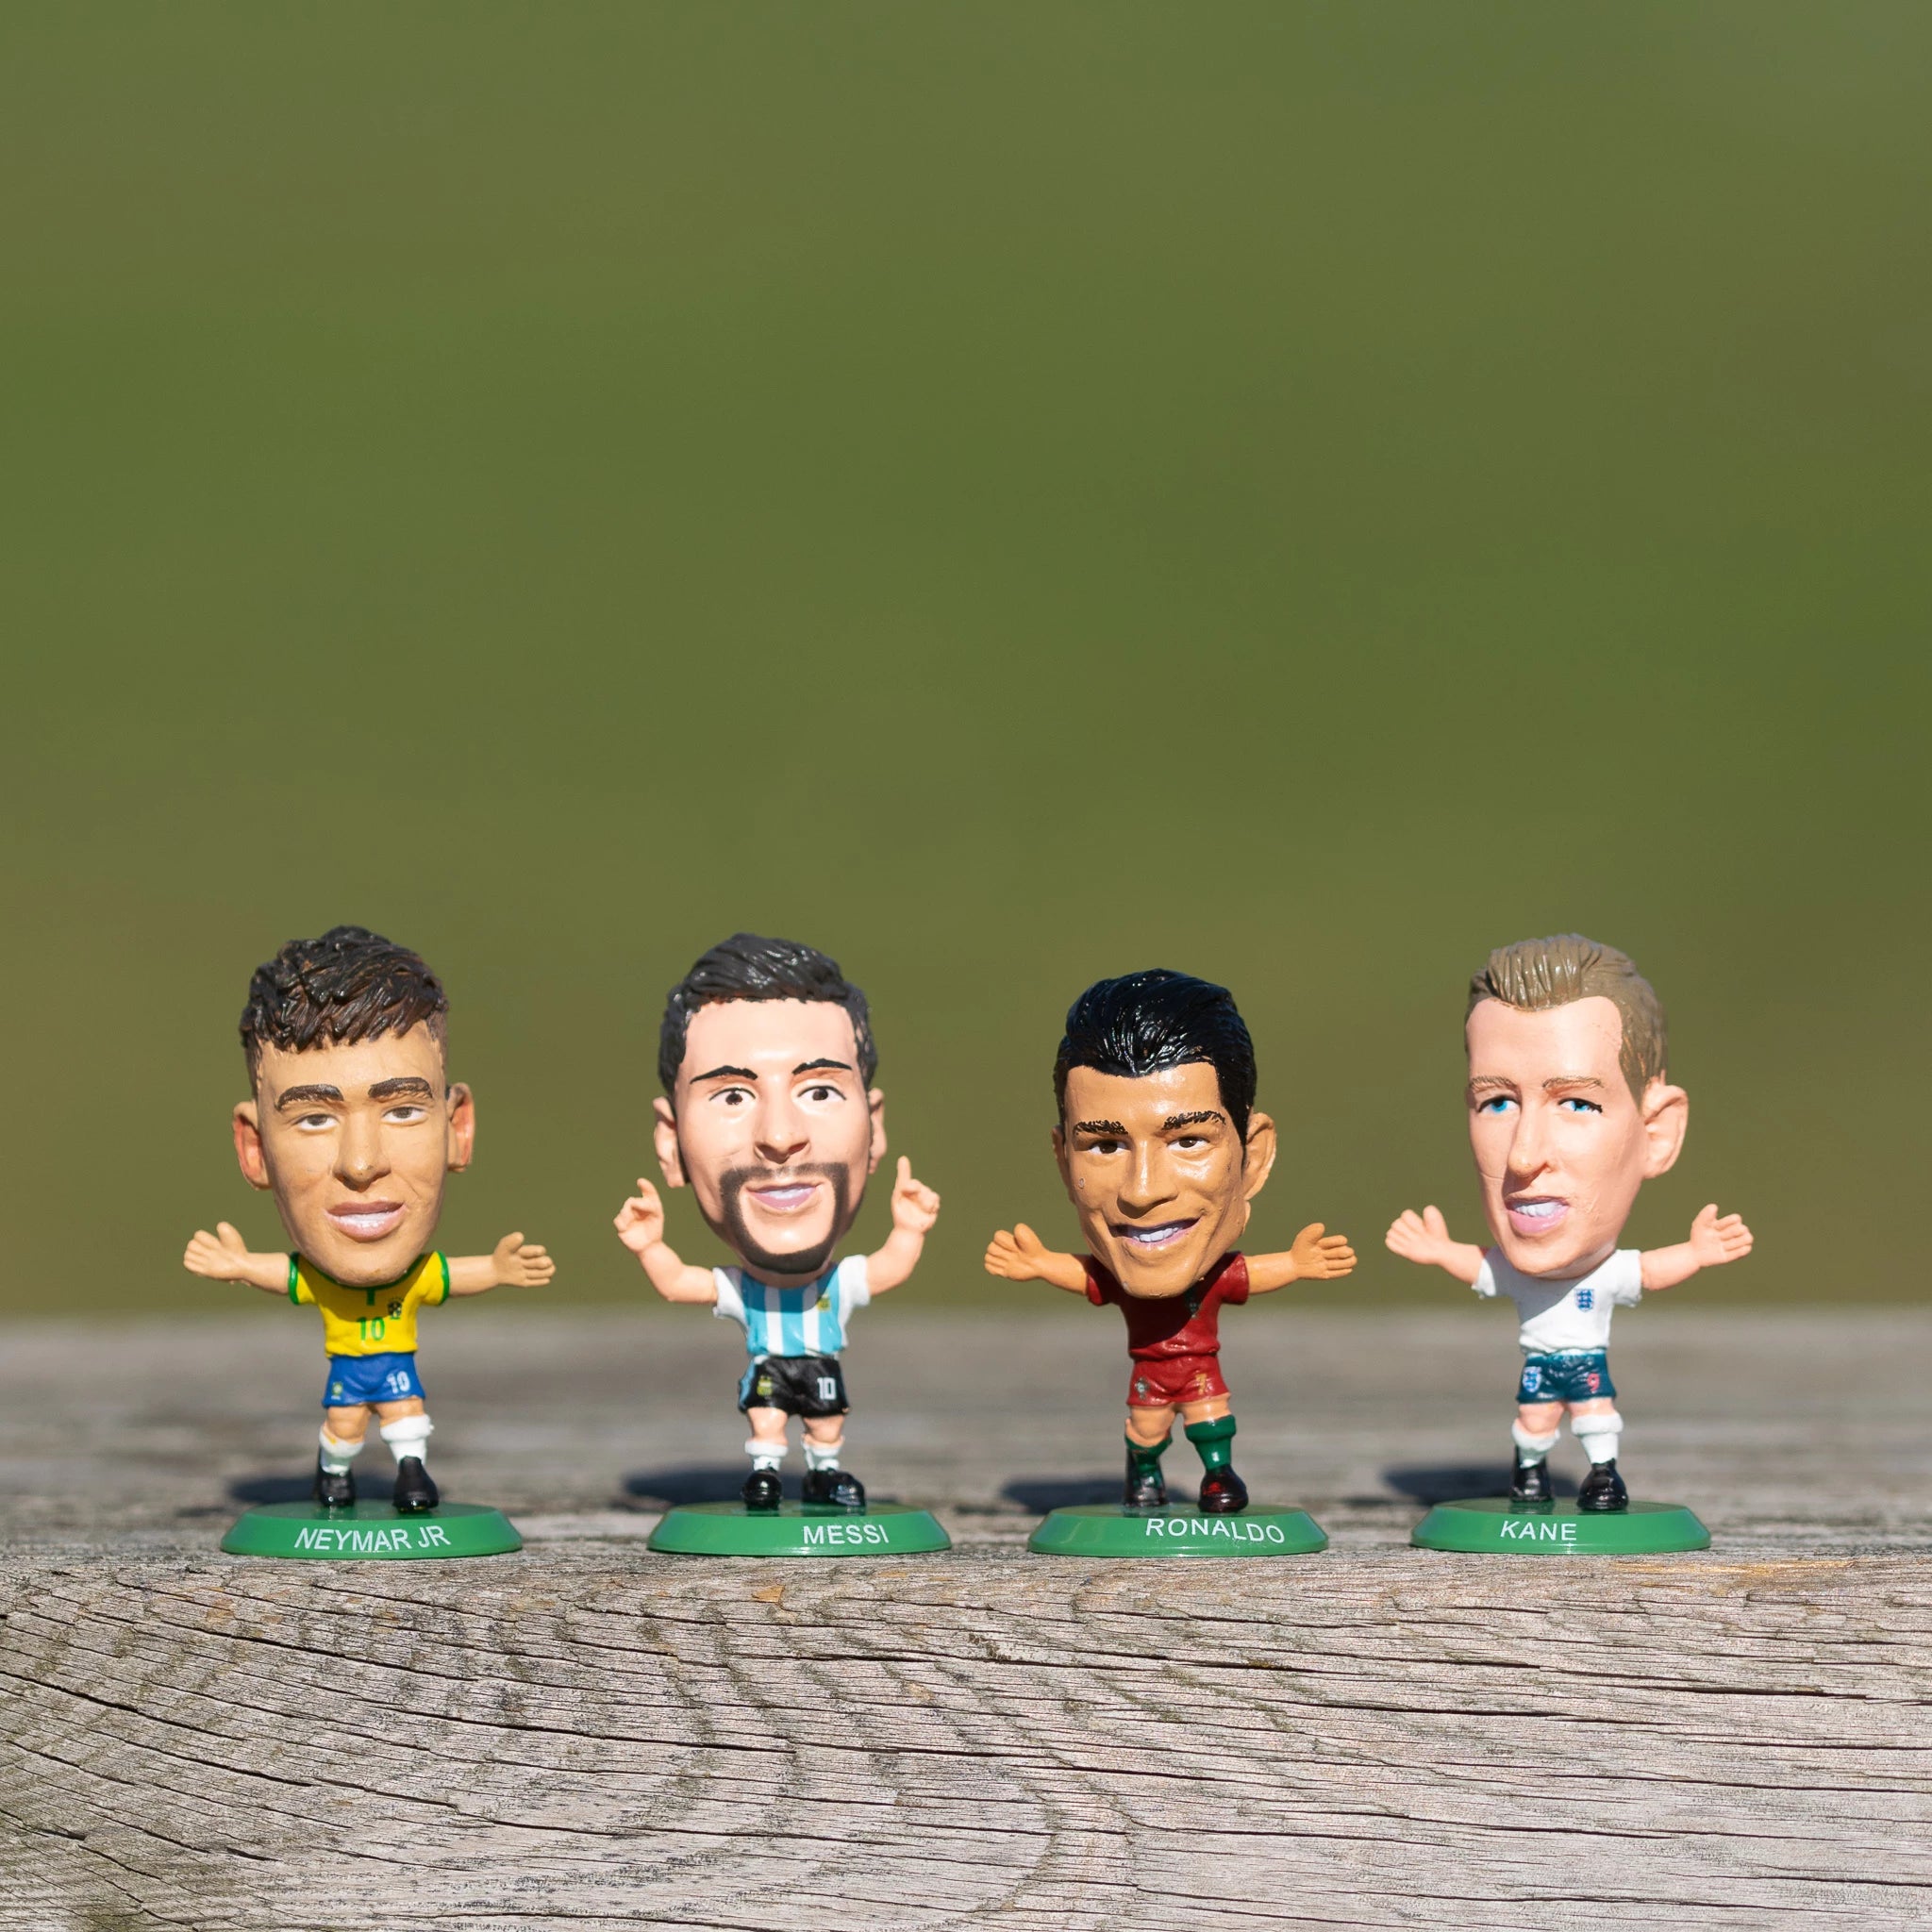 Soccerstarz Arsenal 2015 FA Cup Winners 17 Player Team Pack /Figures